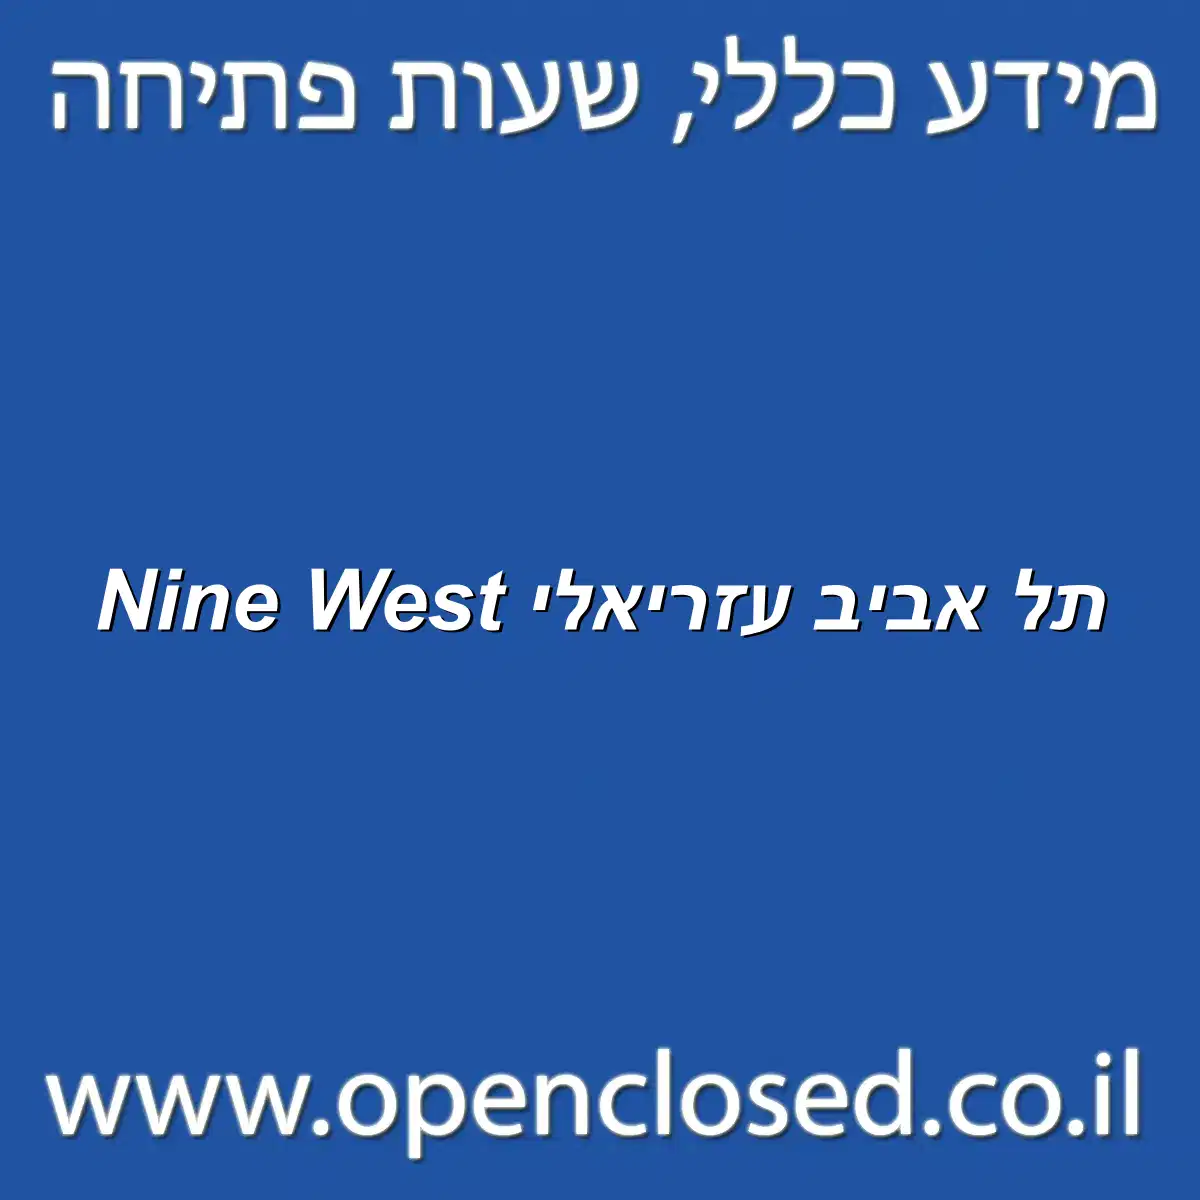 Nine West תל אביב עזריאלי